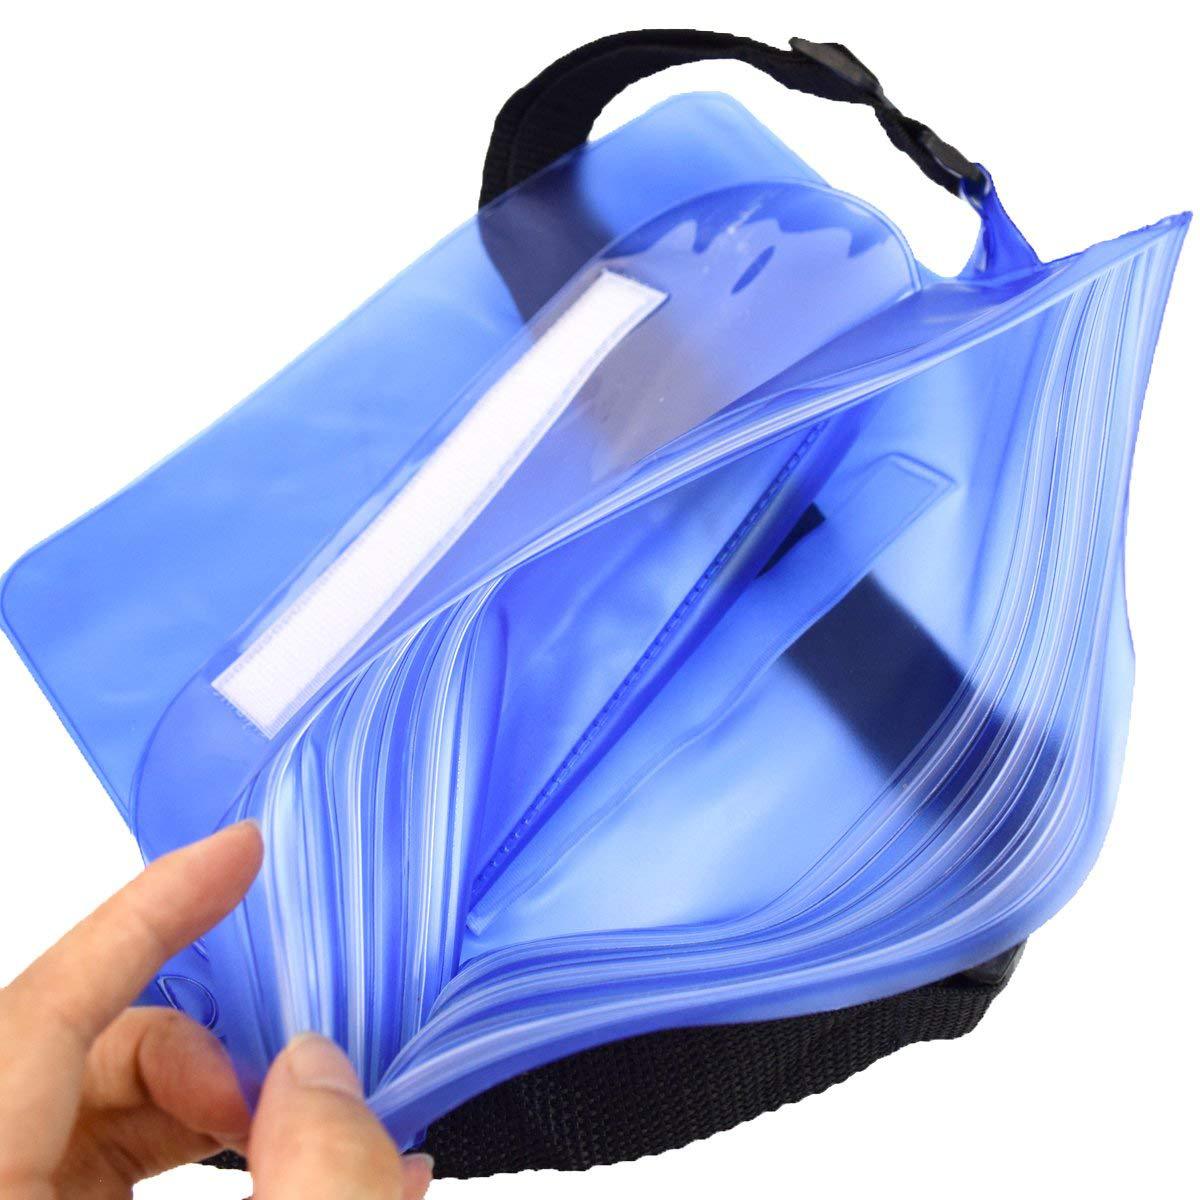 PVC waterproof pouch / waist bag - gray